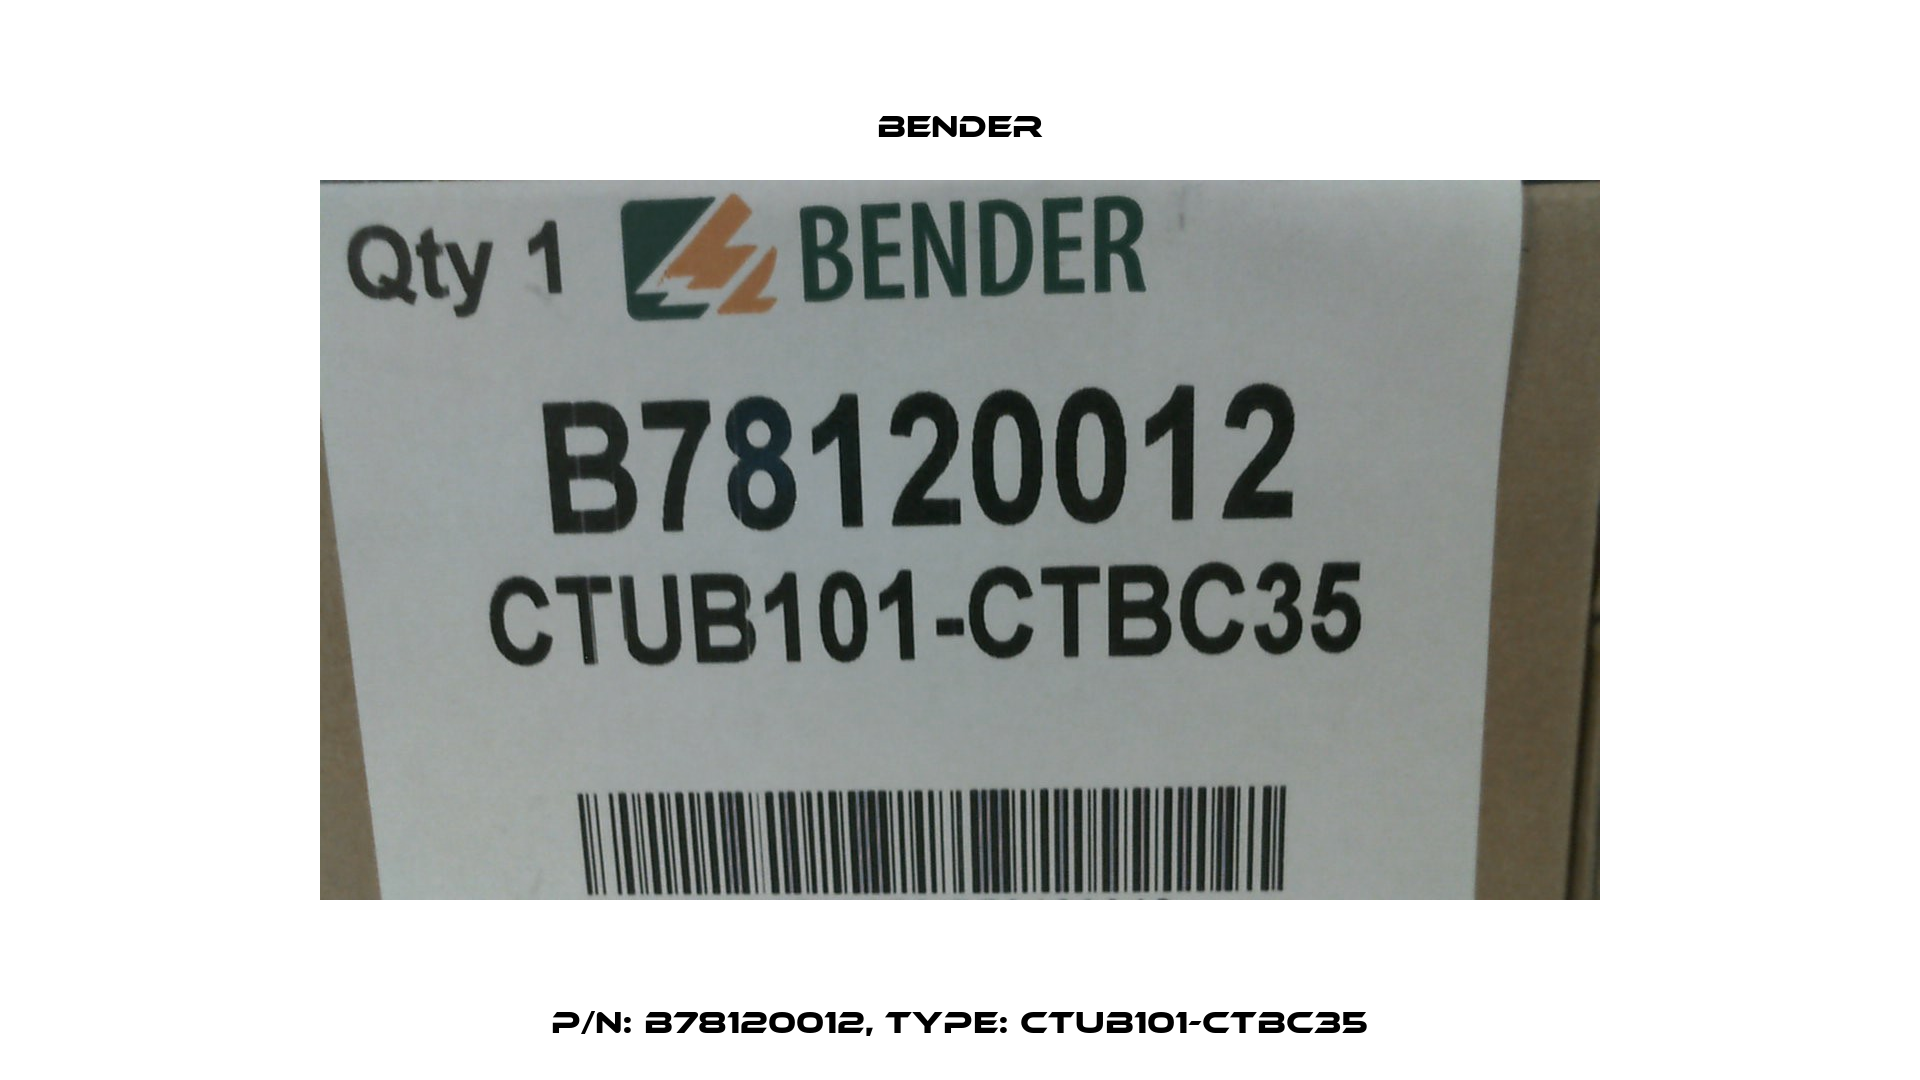 P/N: B78120012, Type: CTUB101-CTBC35 Bender